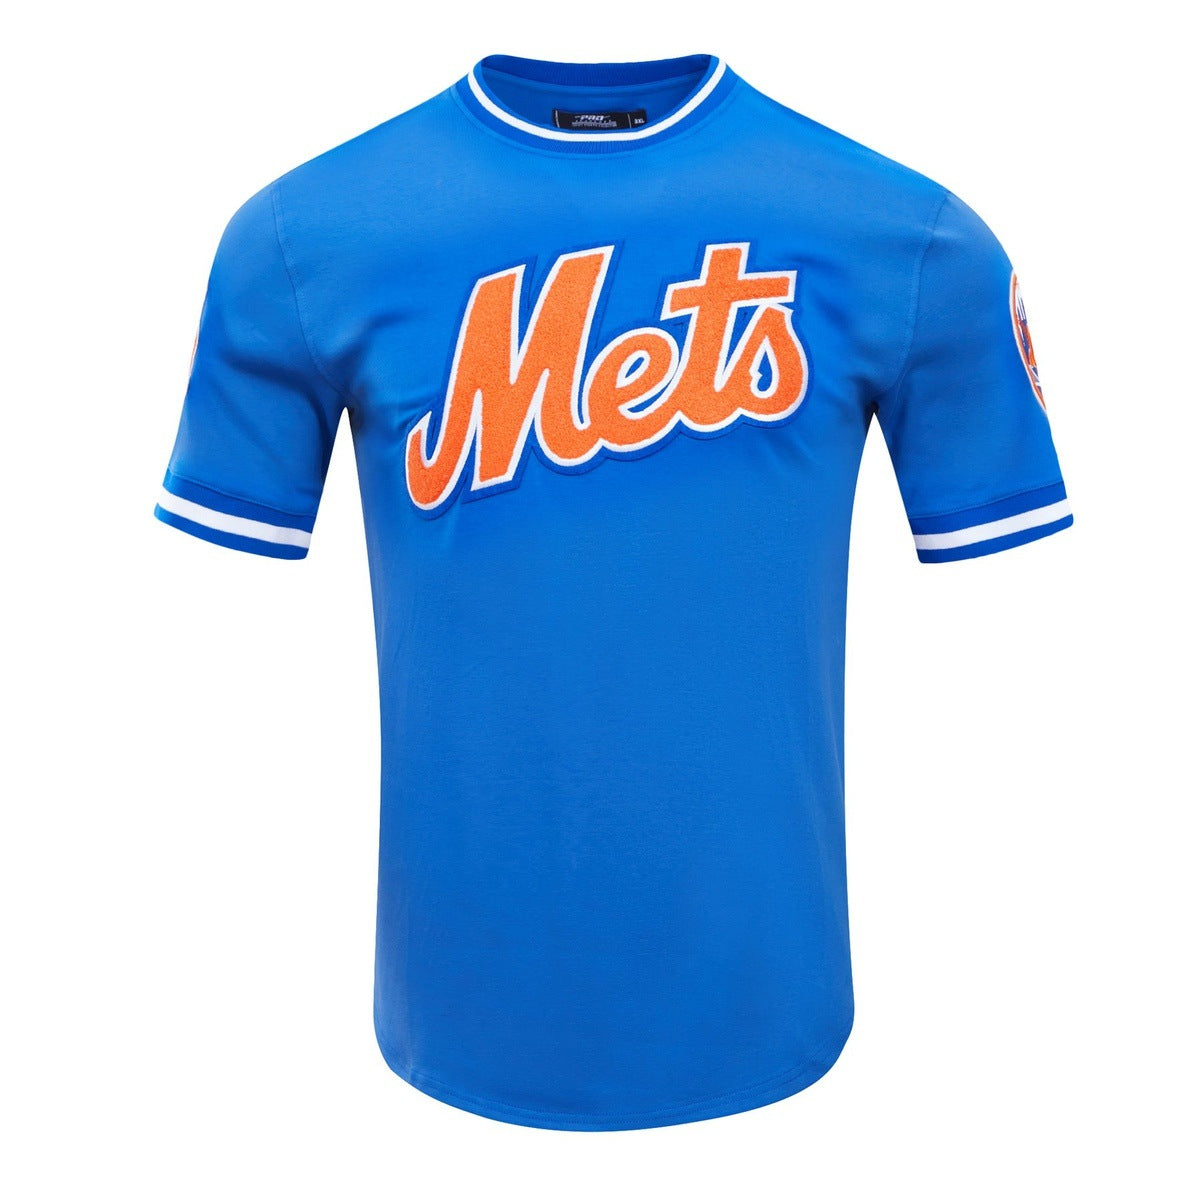 New York Mets Meet The Mets Music Lyric 2021 Shirt - Kingteeshop